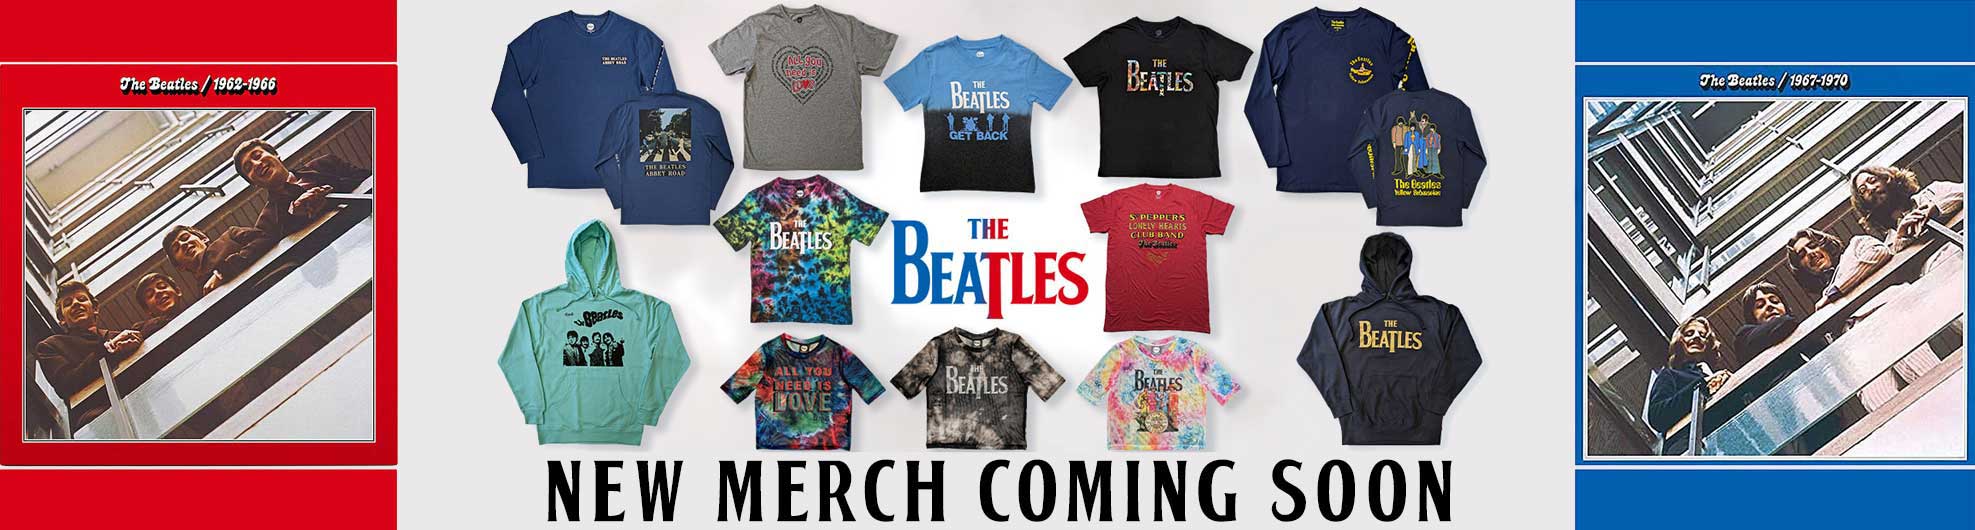 The Beatles Authentic Beatles merchandise